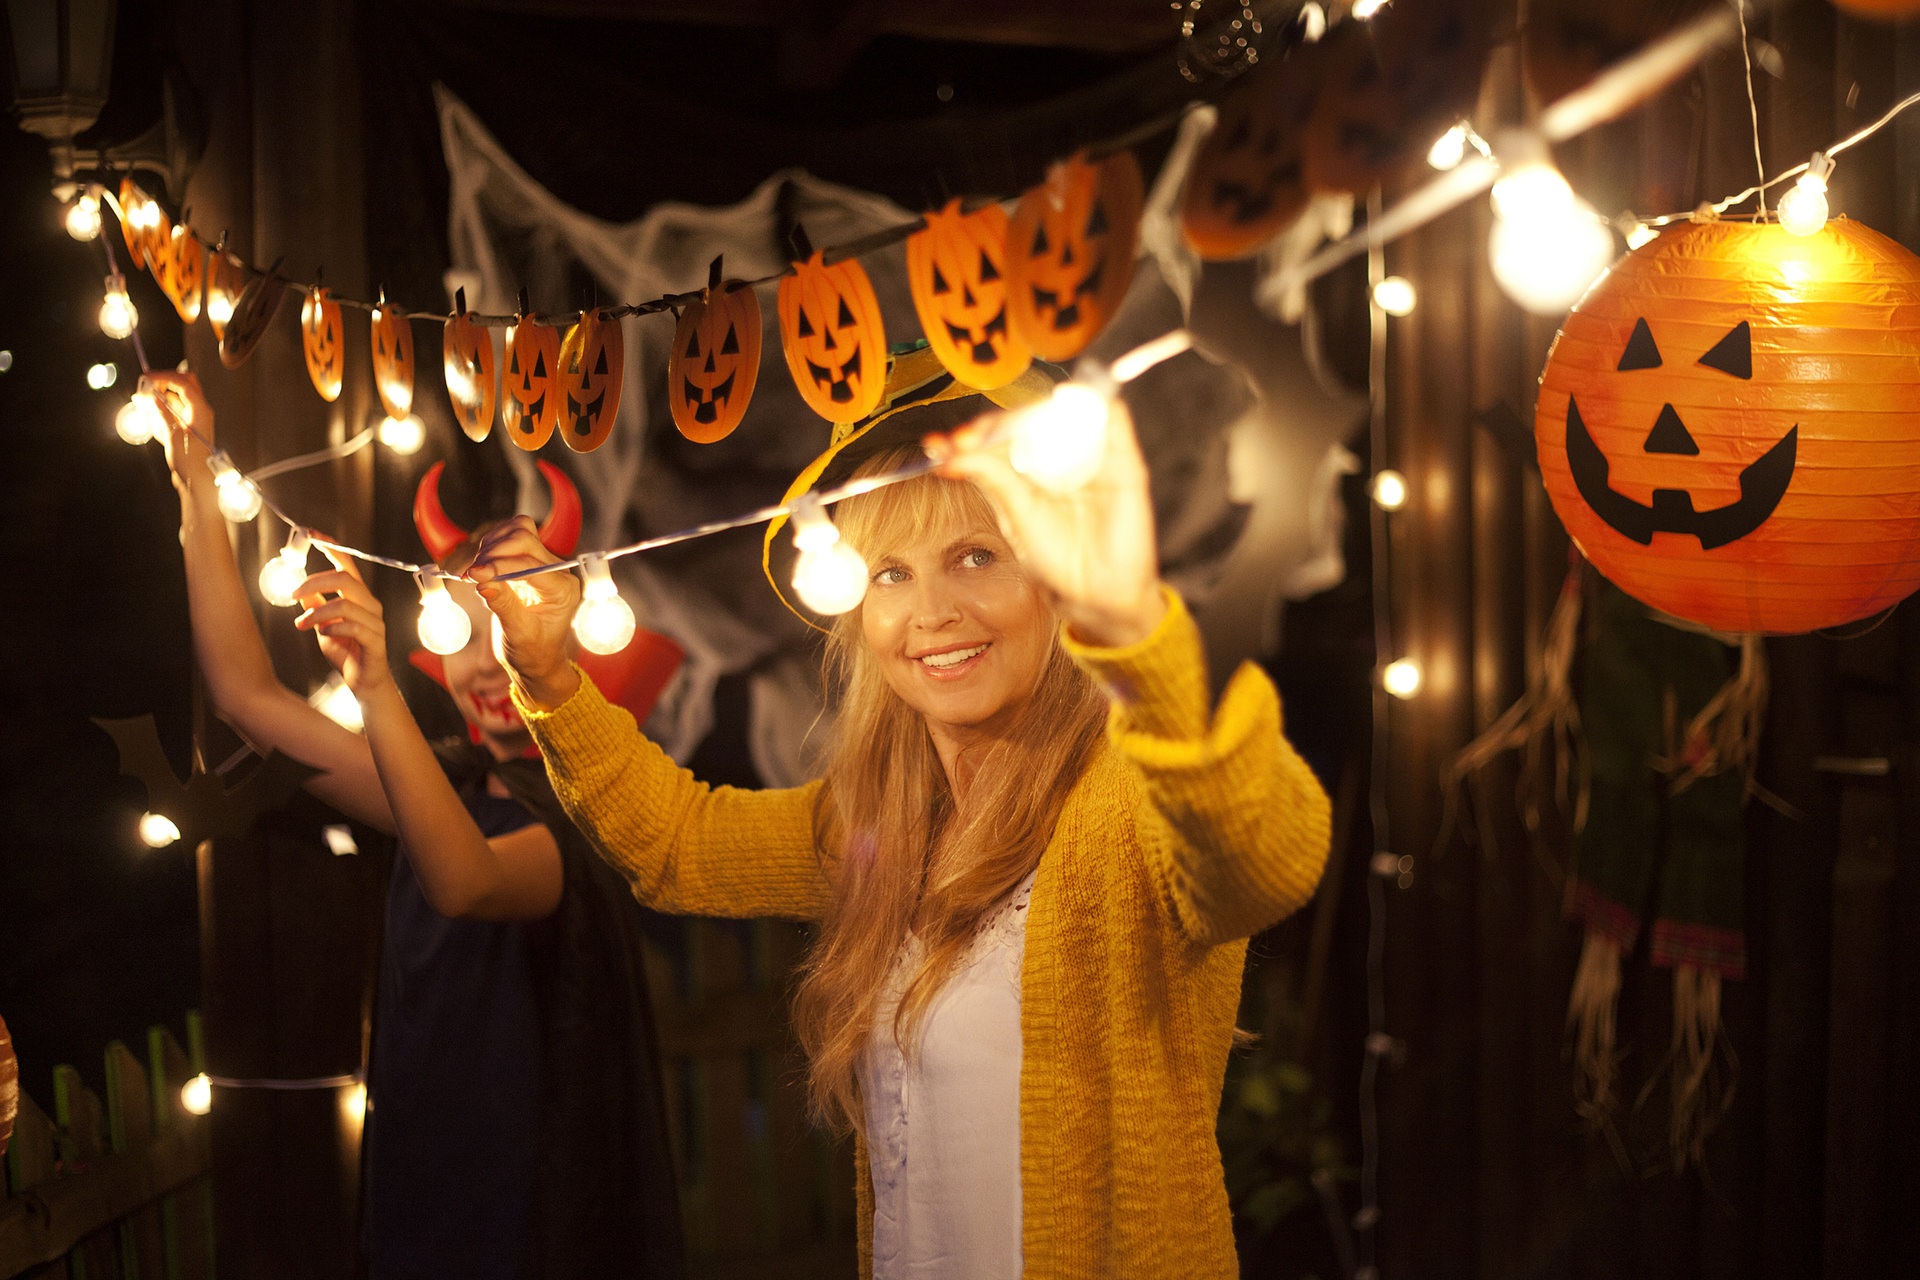 Don't Open Dead Inside Horror Halloween Doormat Home Decor - Jolly Family  Gifts